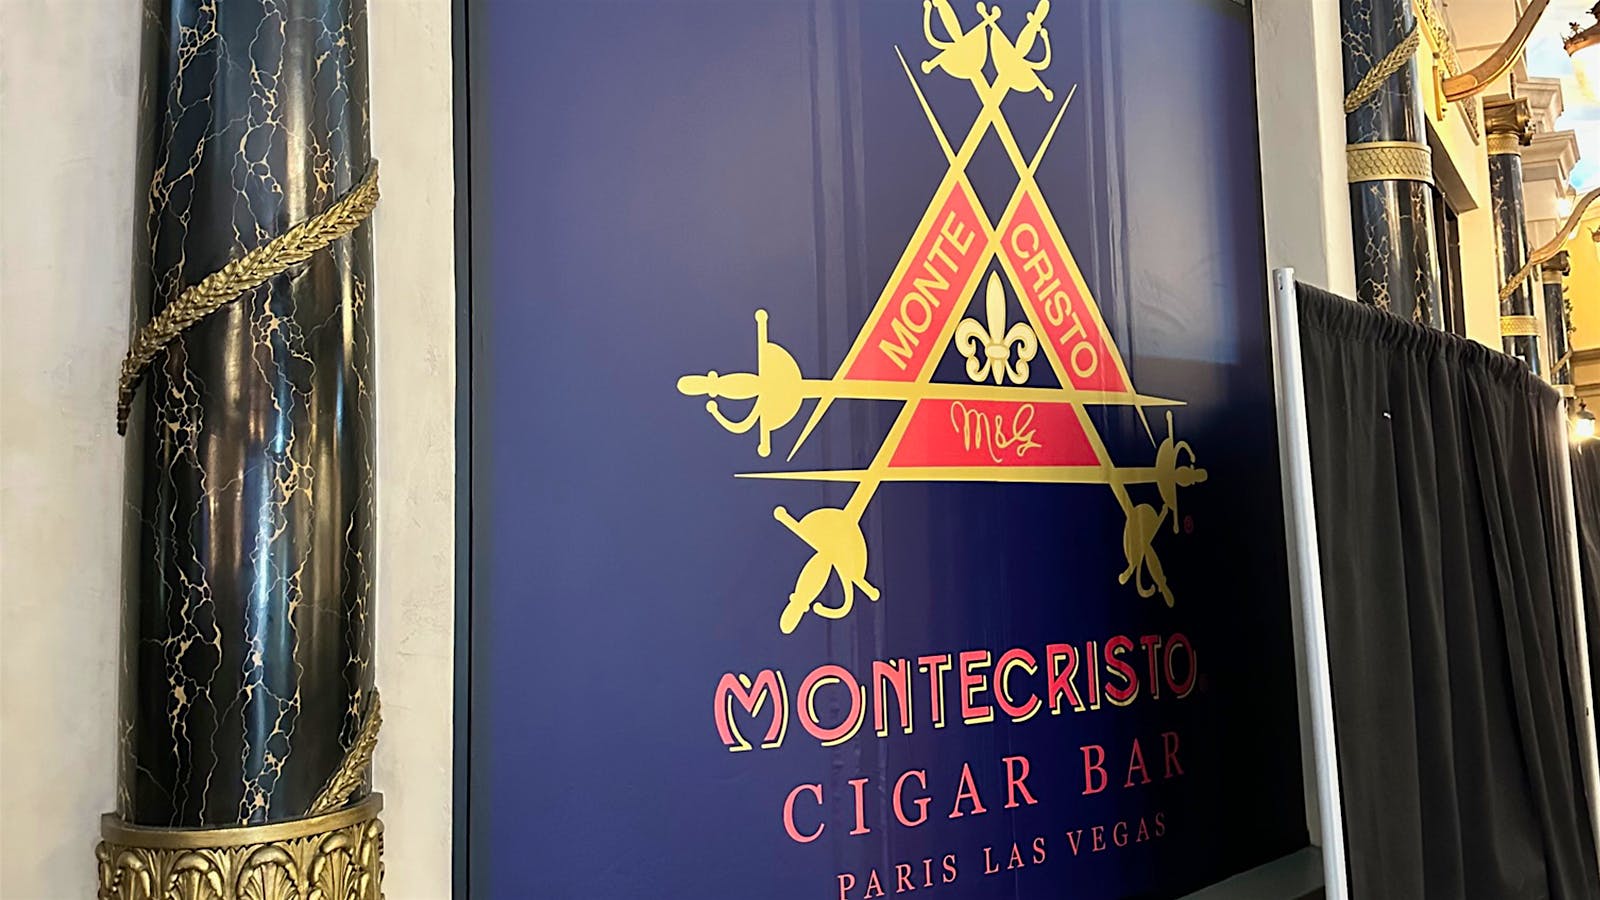 Construction Begins On New Montecristo Cigar Bar In Las Vegas